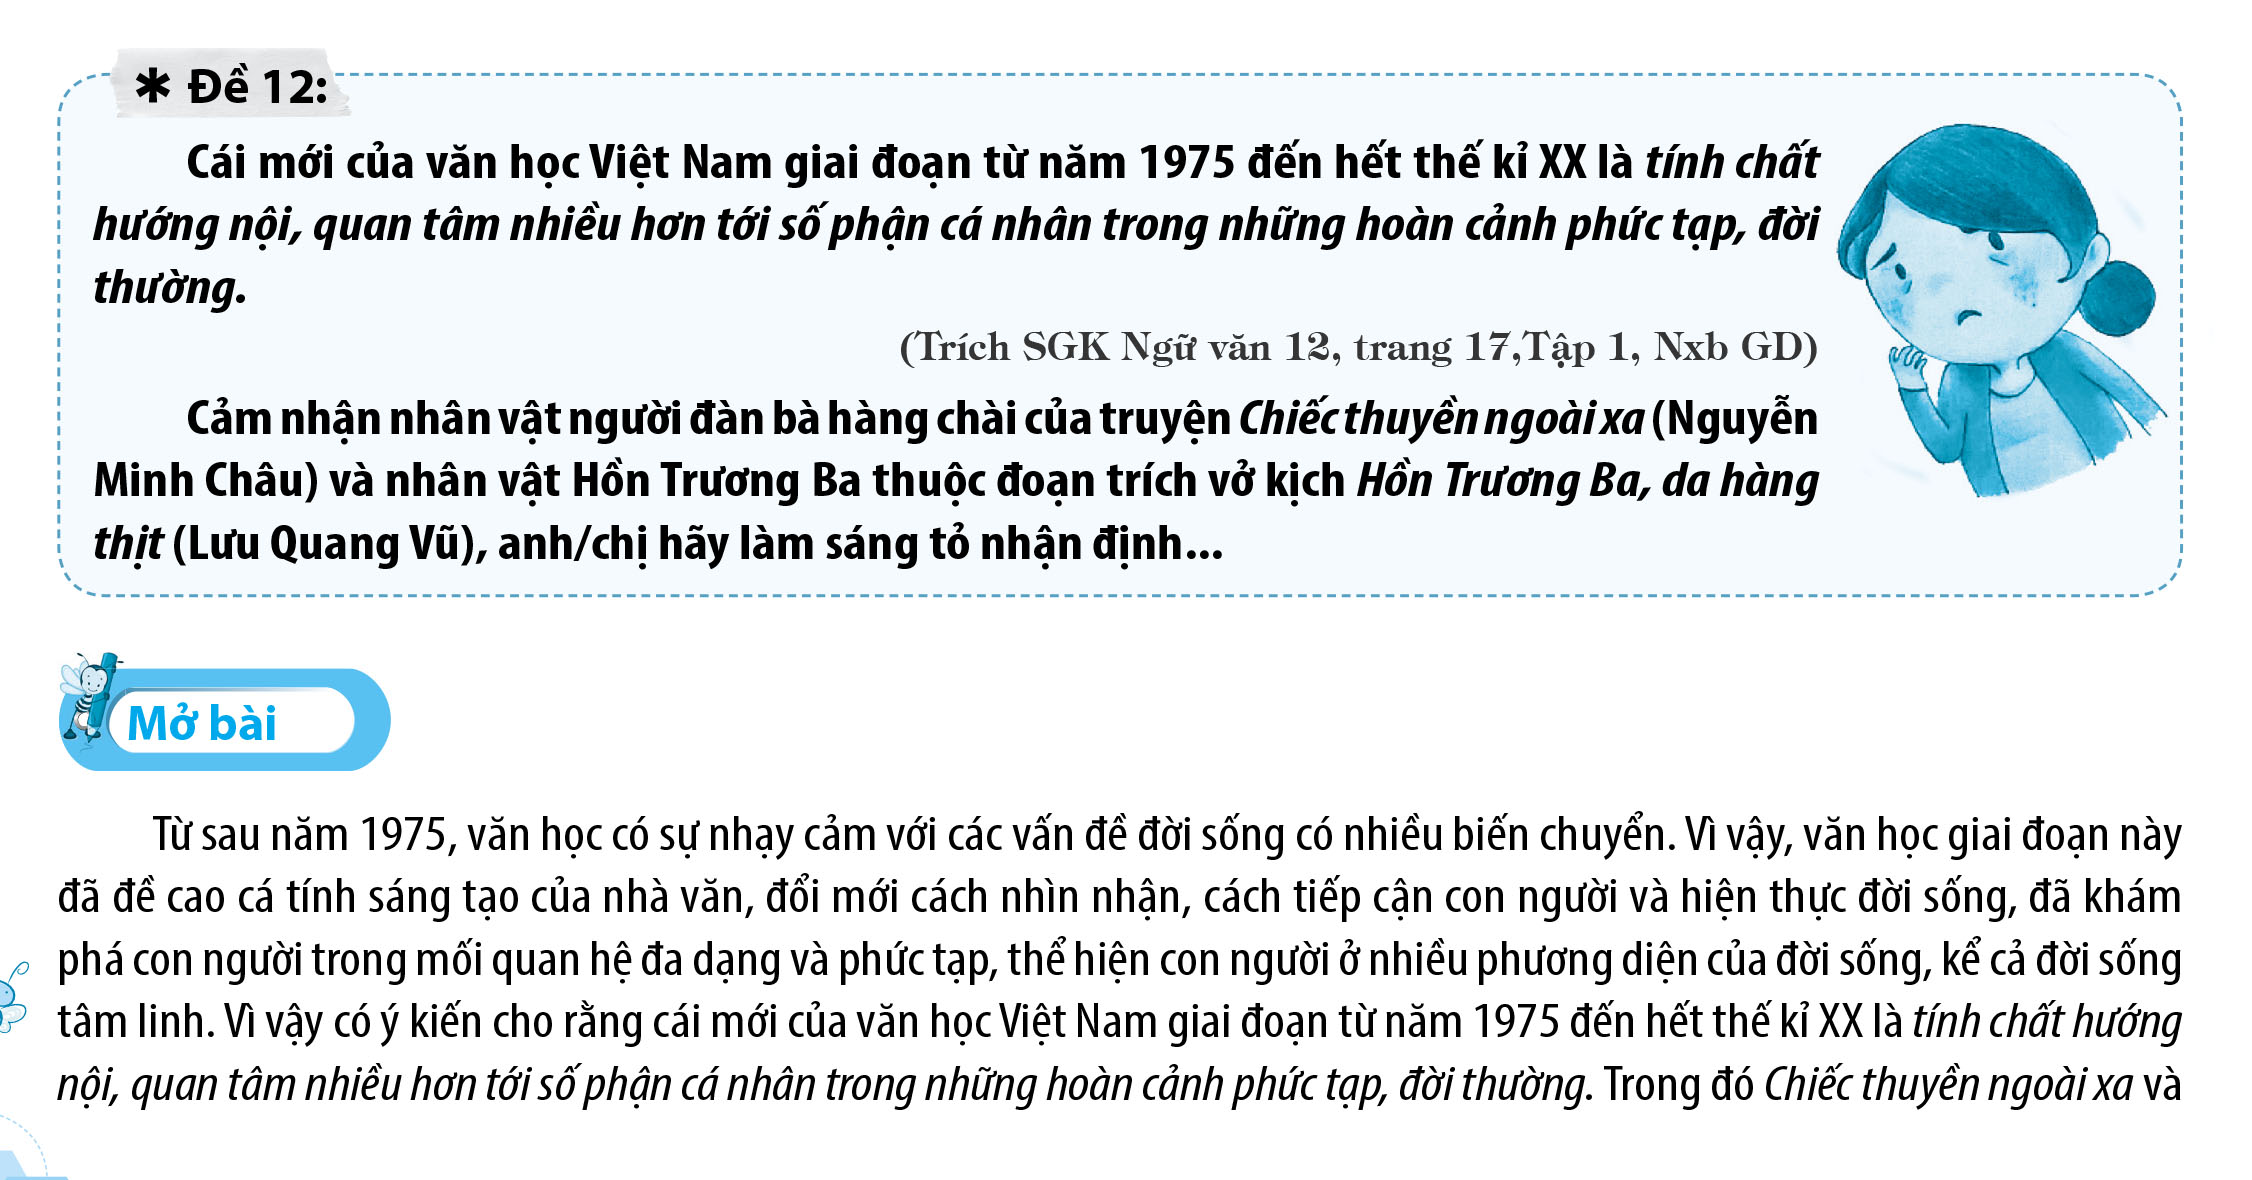 chien luoc nghi luan - van hoc Trung hoc pho thong(15.10).indd